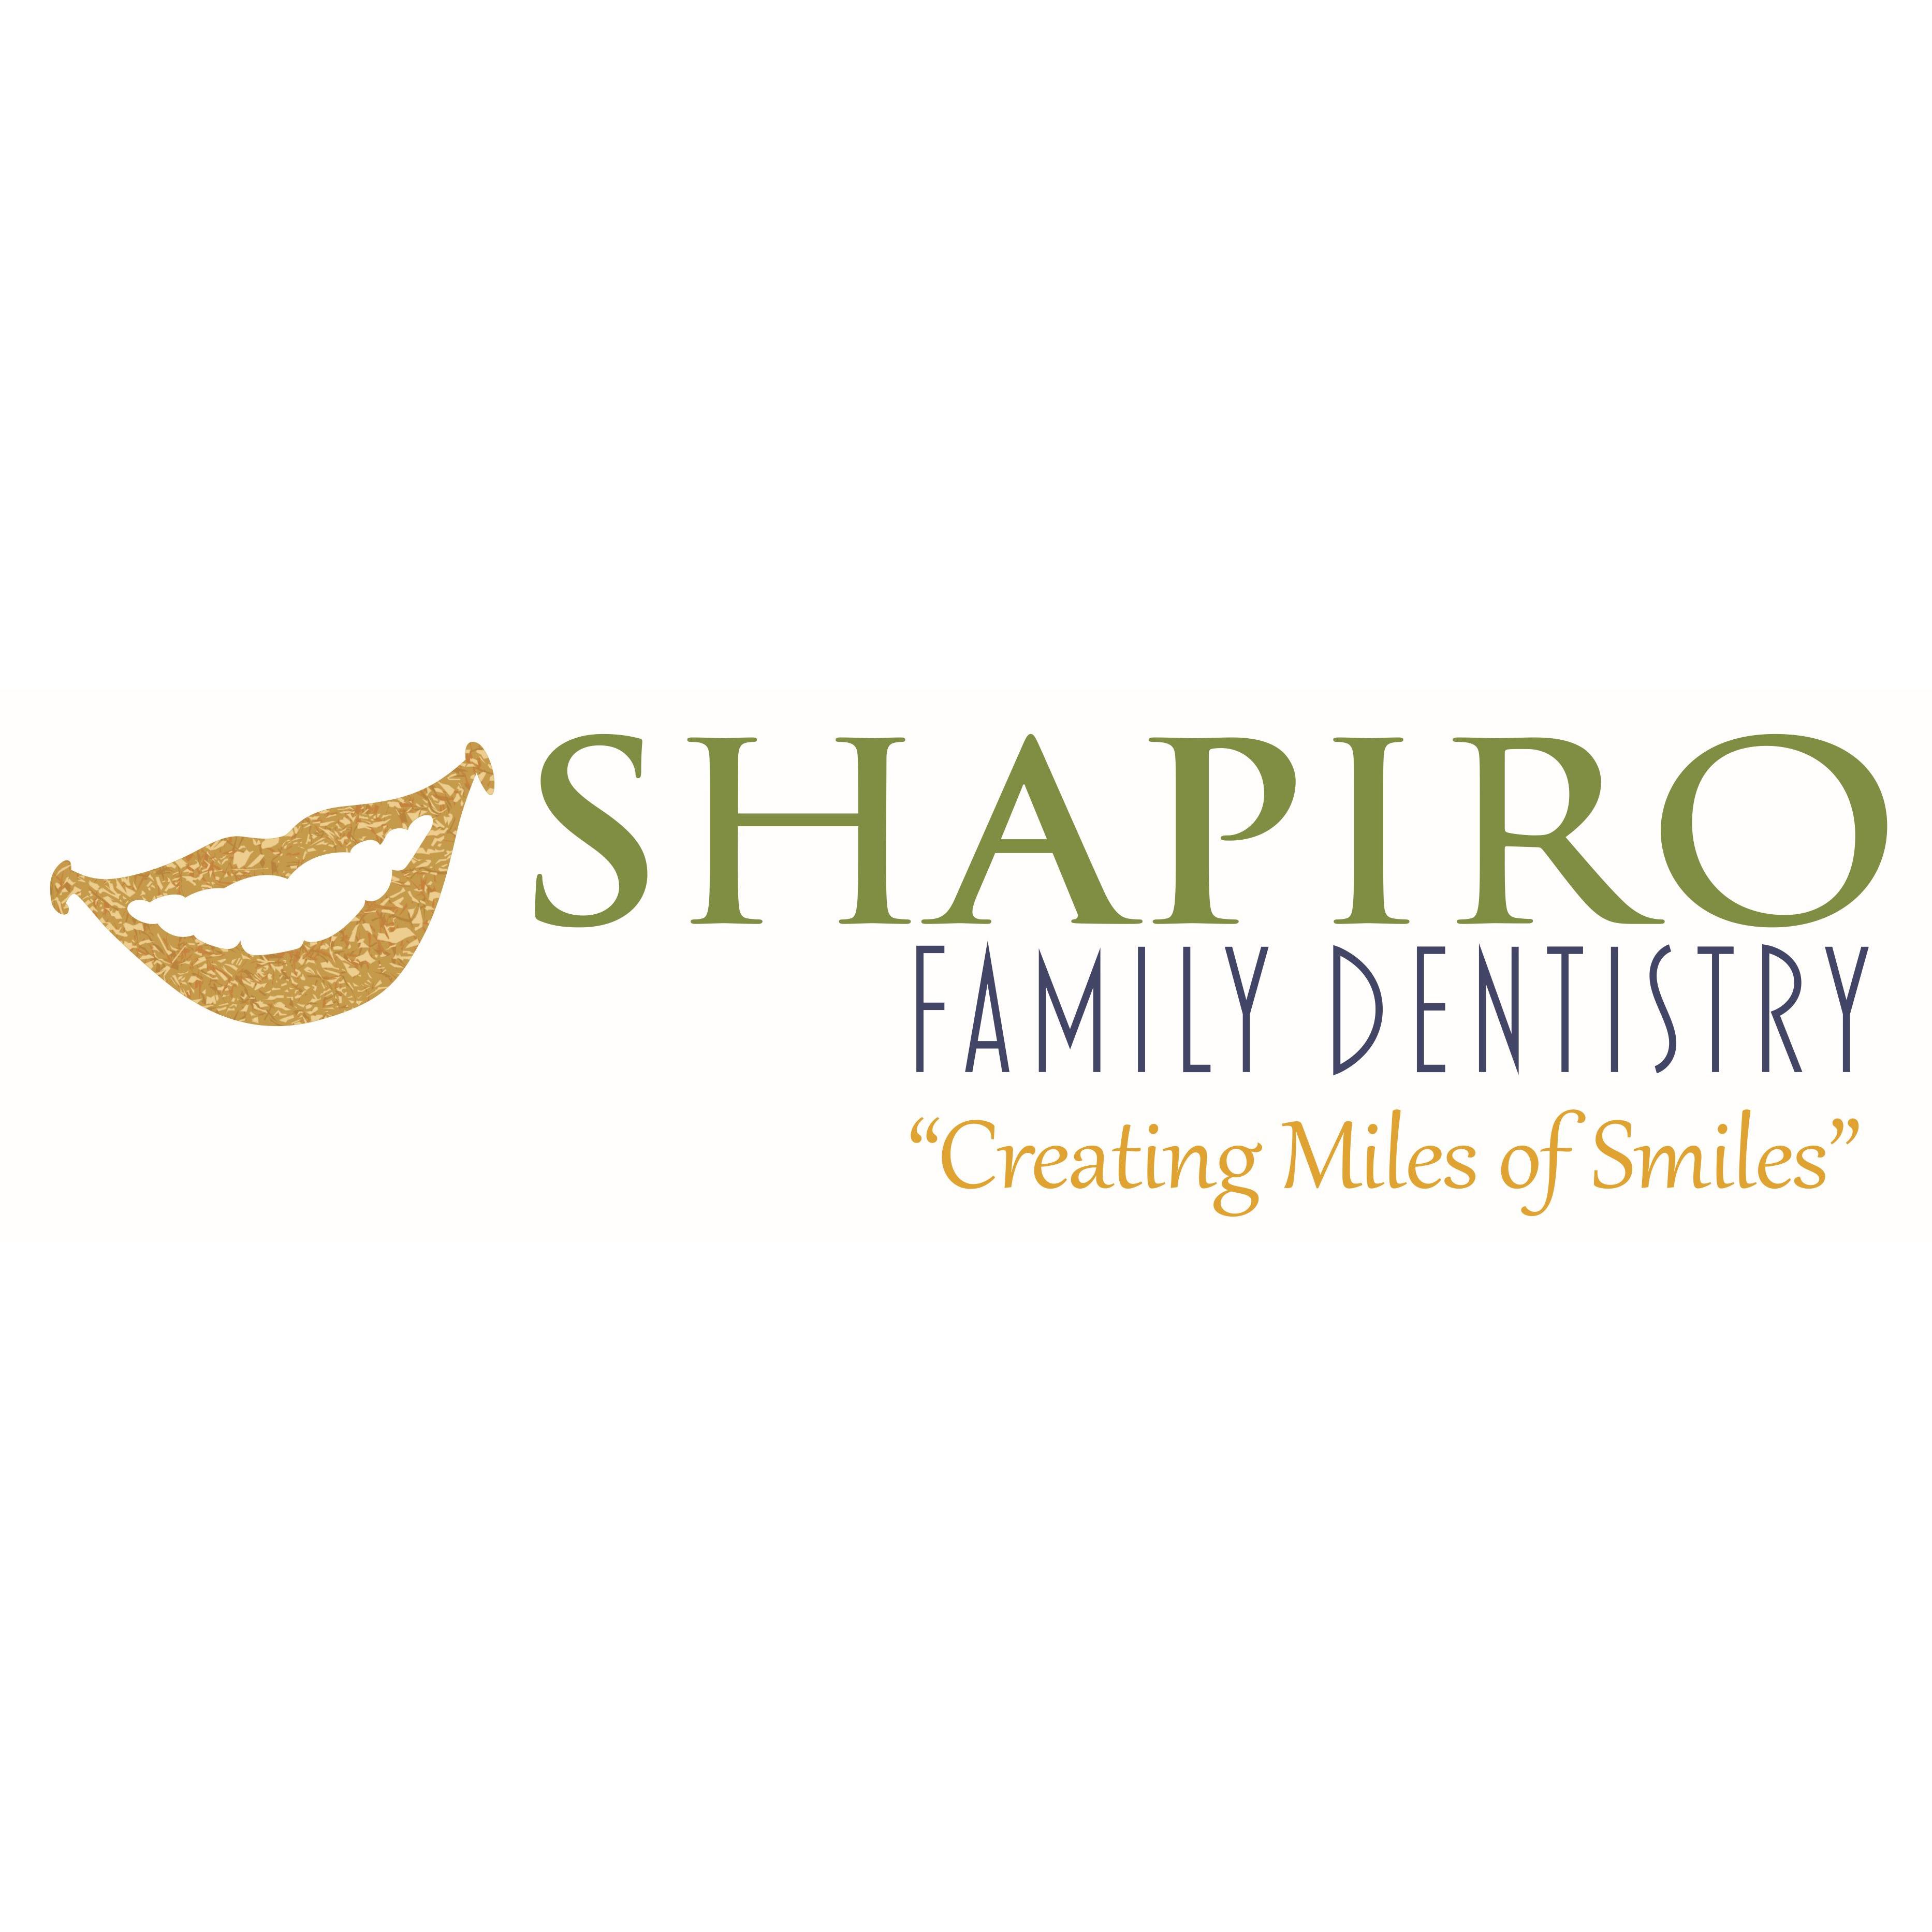 Shapiro Family Dentistry of Boynton Beach - Boynton Beach, FL 33472 - (561)877-3313 | ShowMeLocal.com